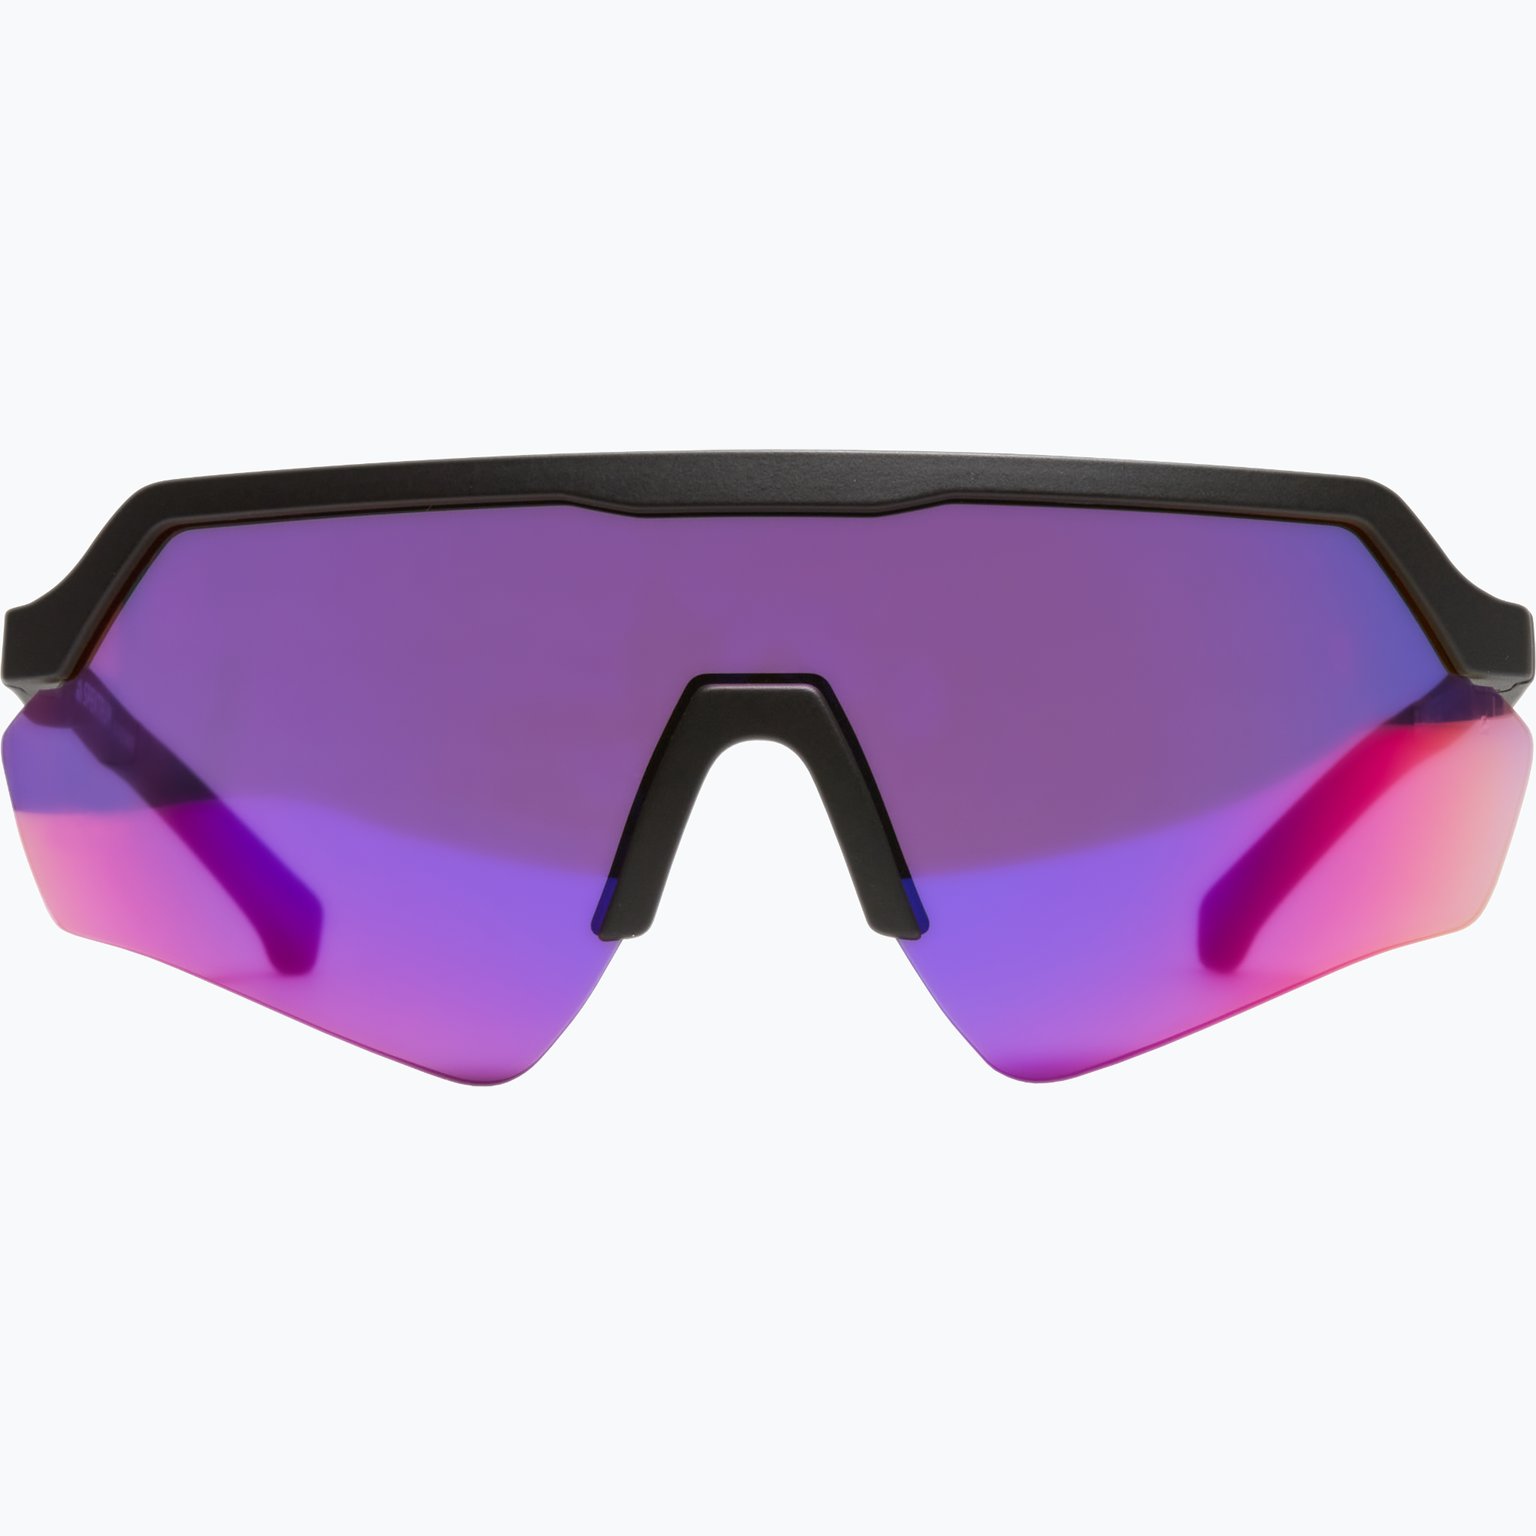 Blankster Infrared sportglasögon